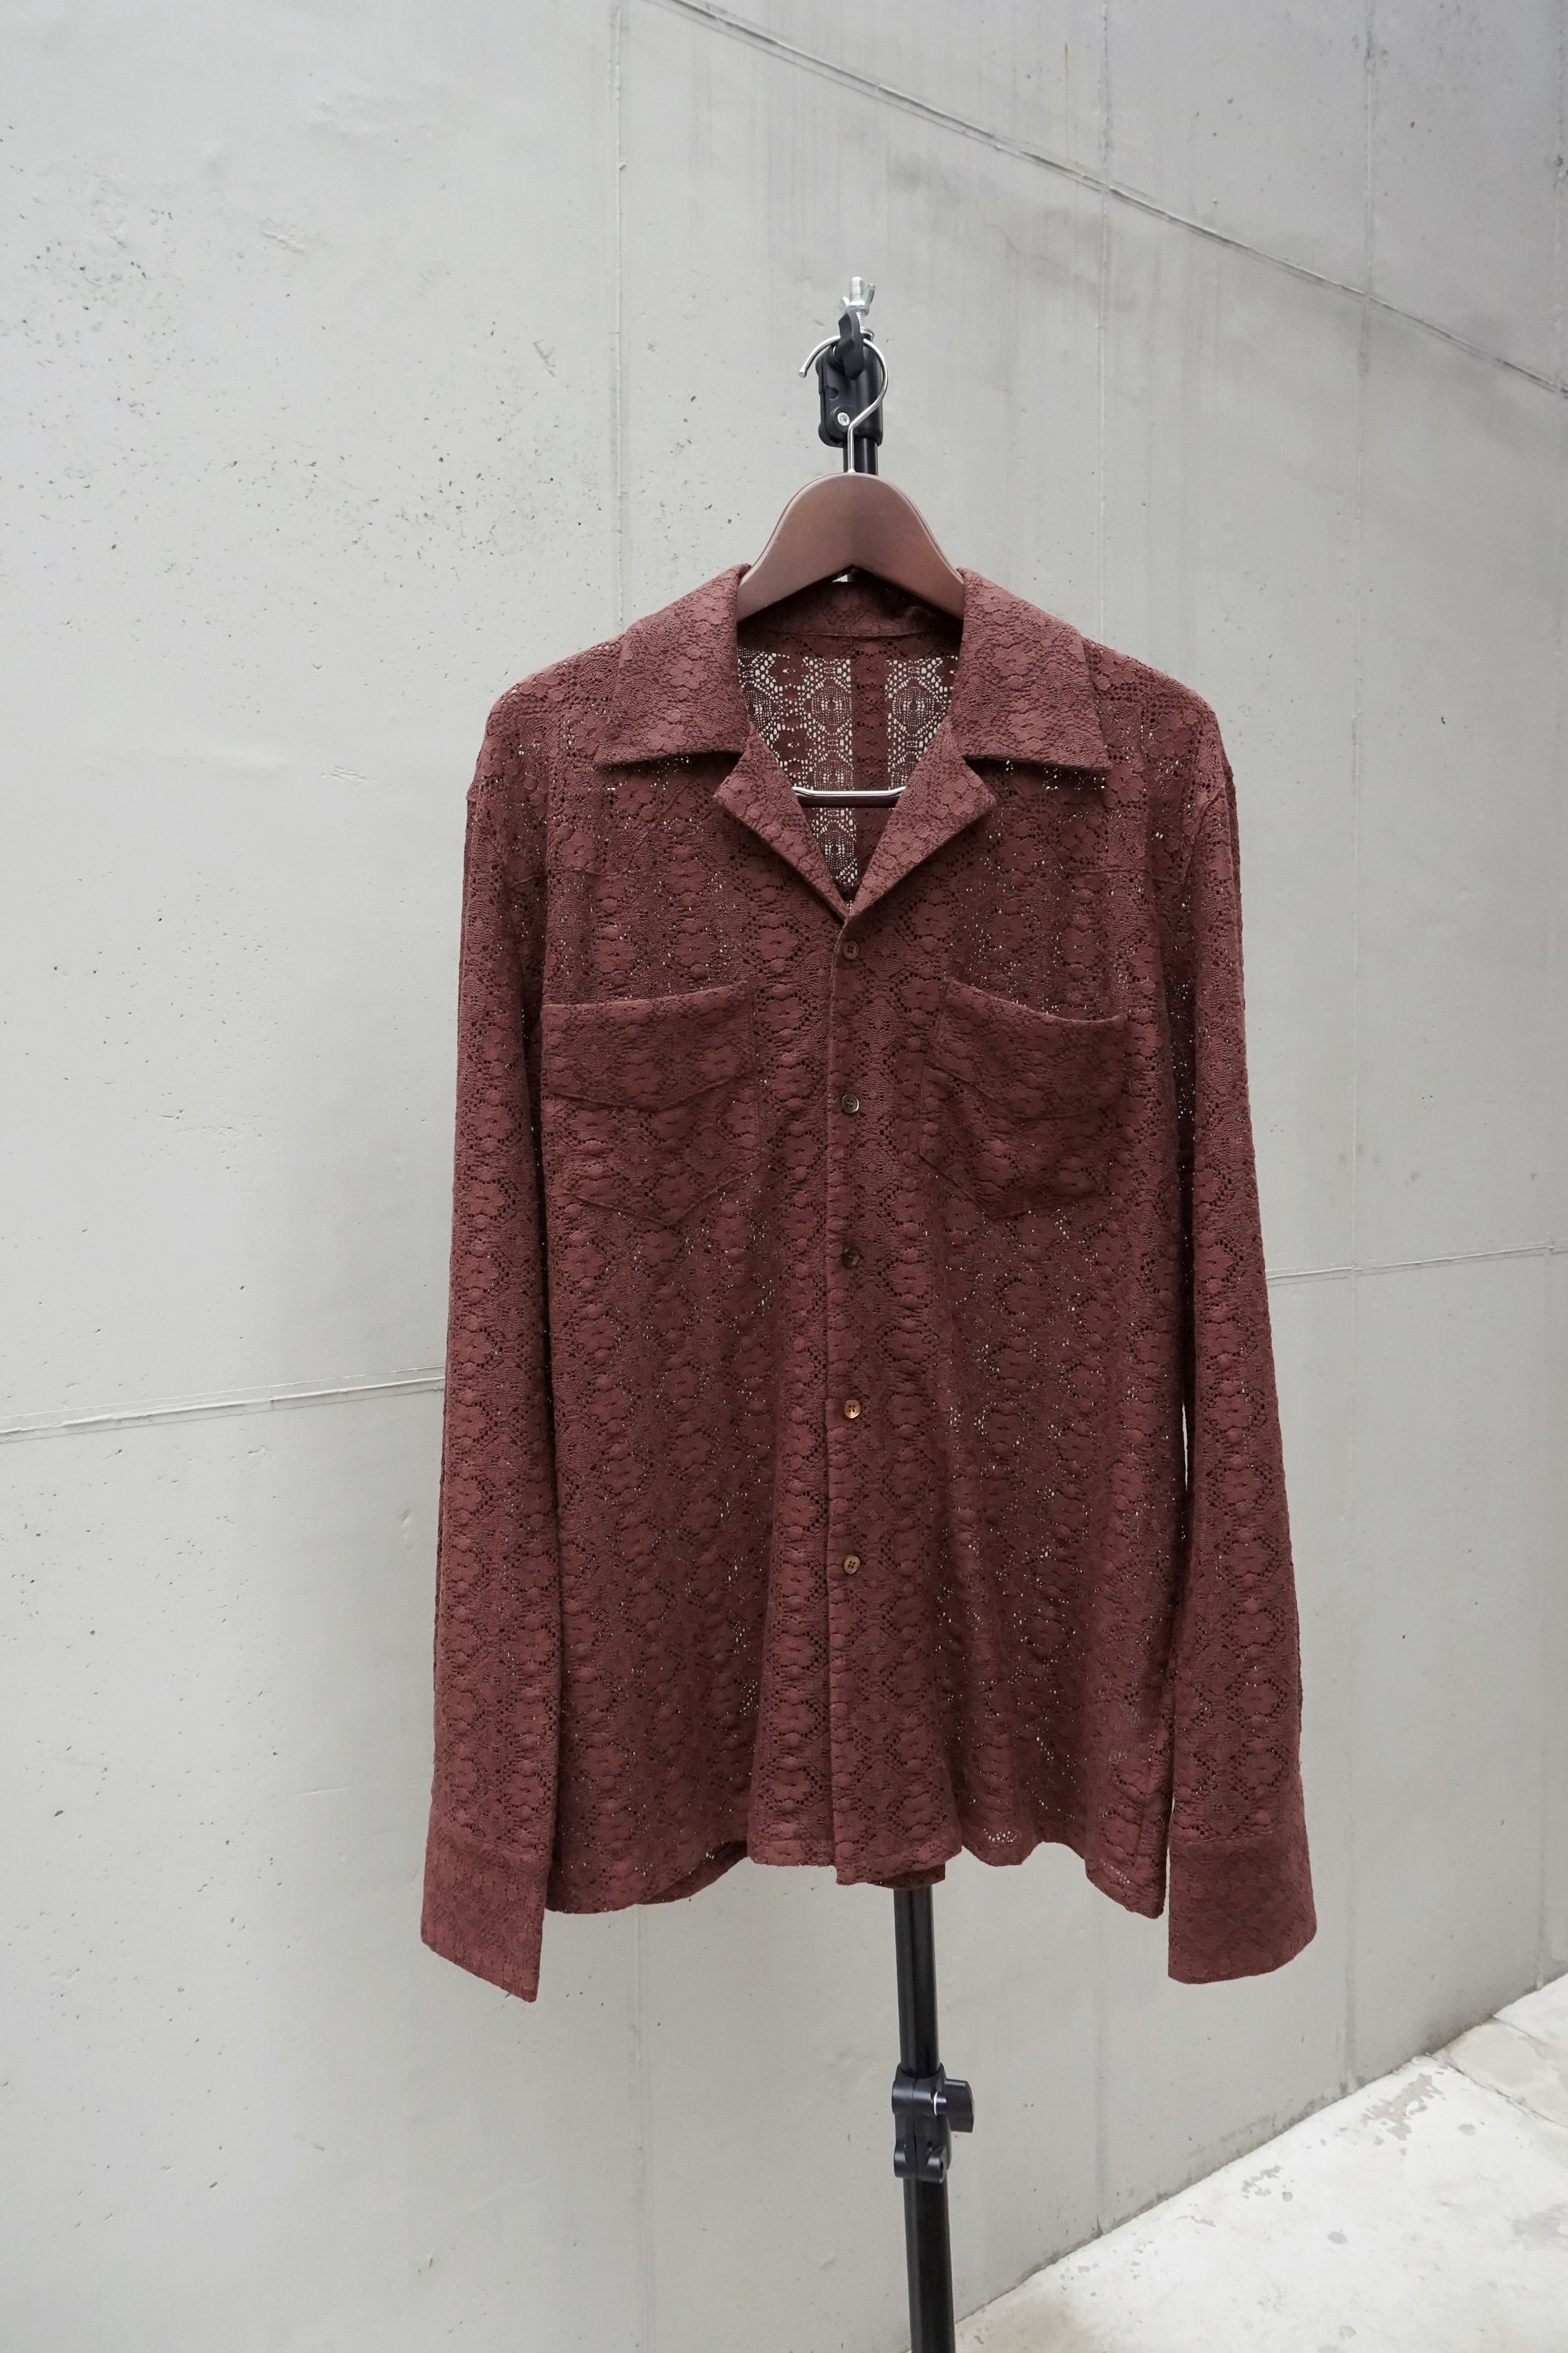 [EPONYM] Western L/S Shirt - Brown Lace